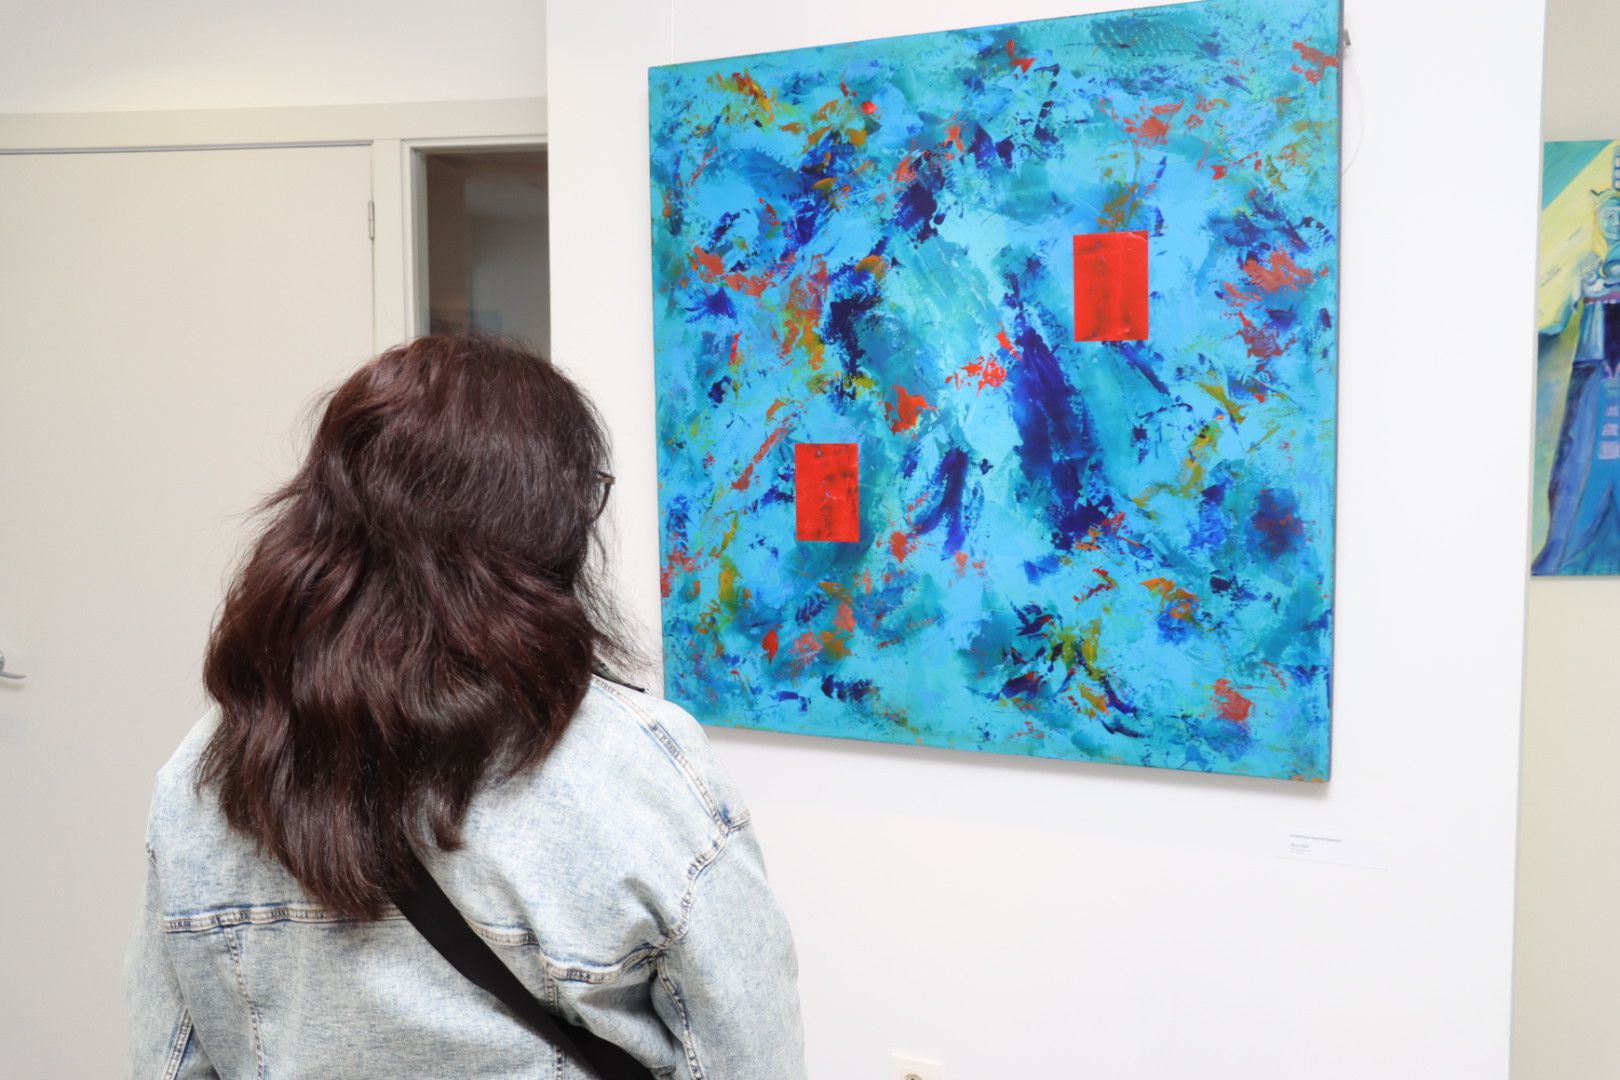 La Casa de la Dona acoge hasta el 23 de abril la exposición “Azul” de Torrent d’Art